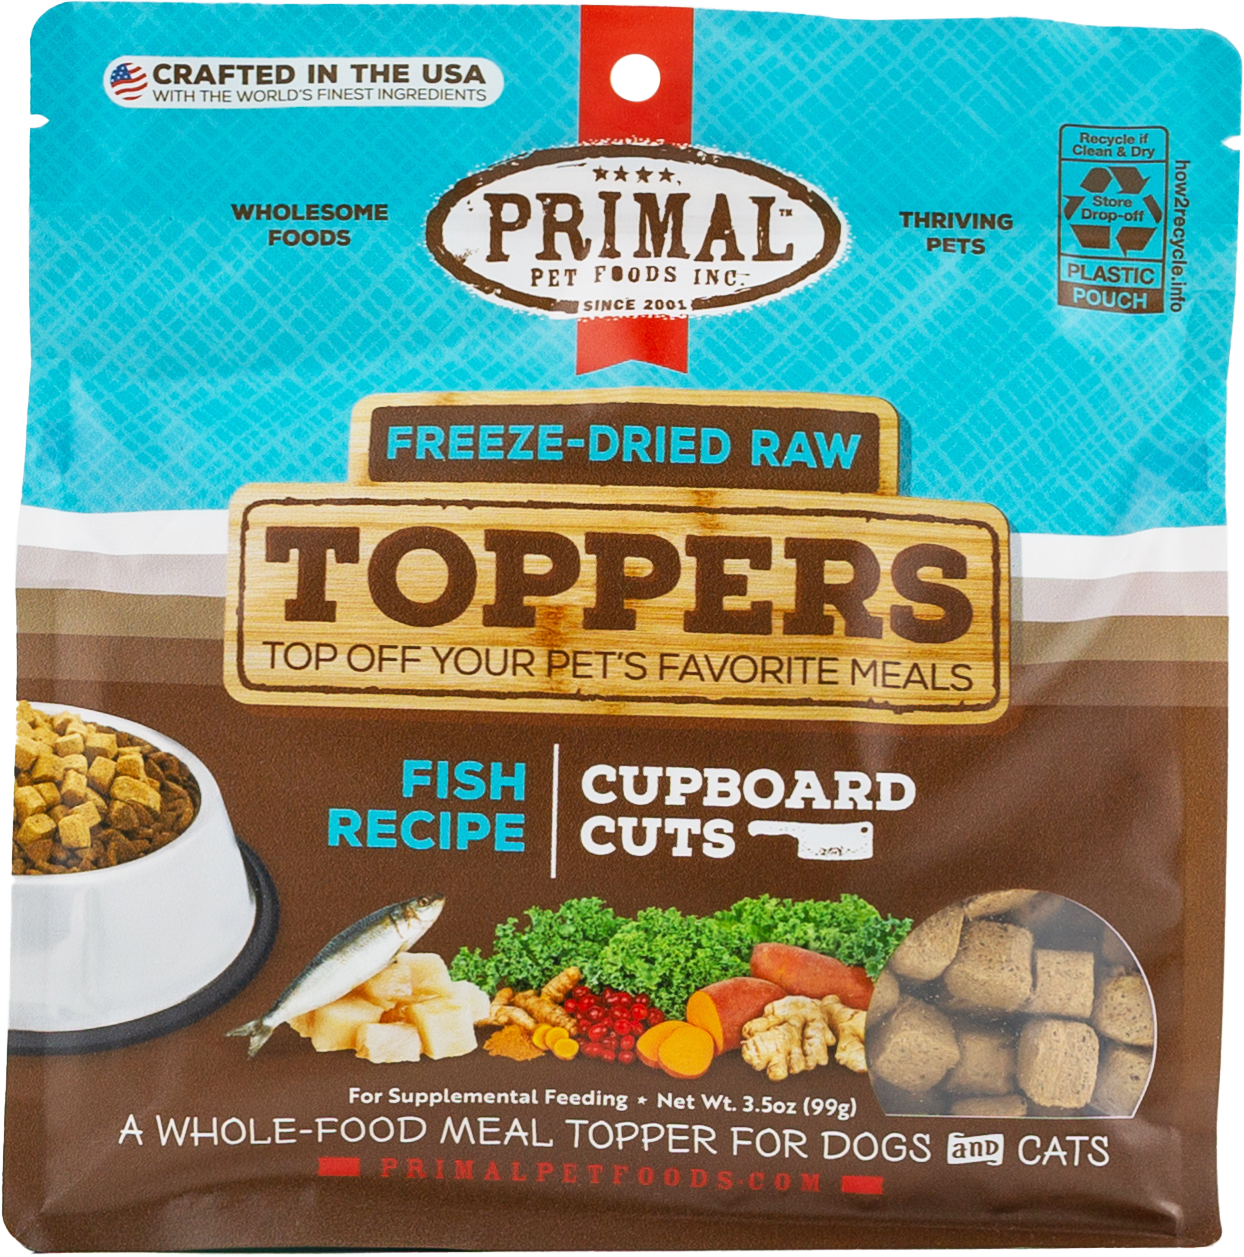 Primal Cupboard Cuts Freeze-Dried Raw Toppers - Fish, 3.5 oz